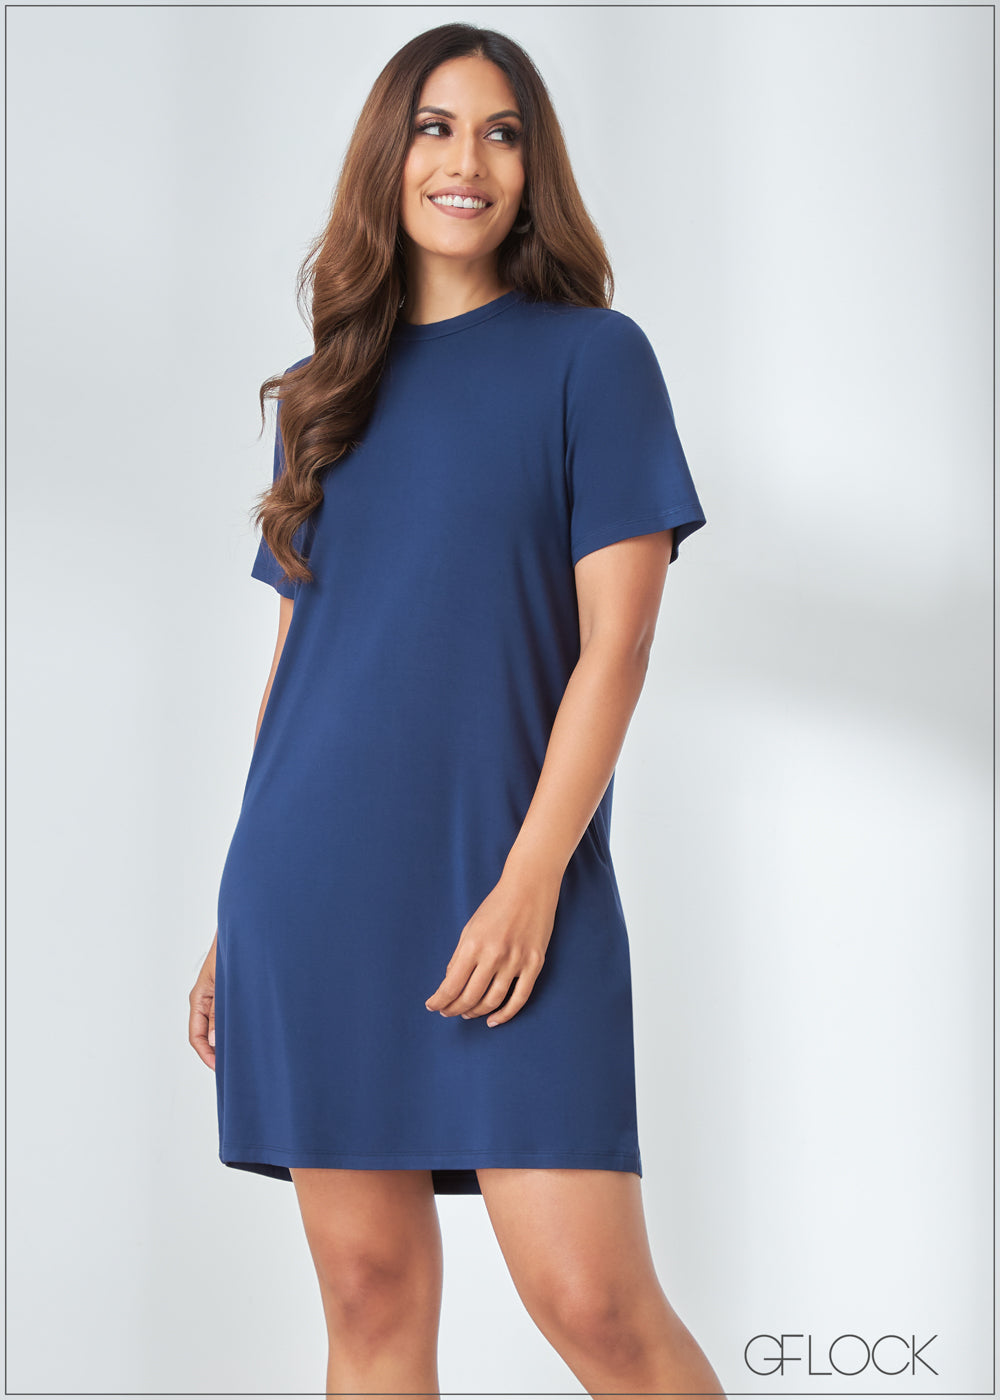 Easy DIY T-Shirt Dress Tutorial – Anita by Design